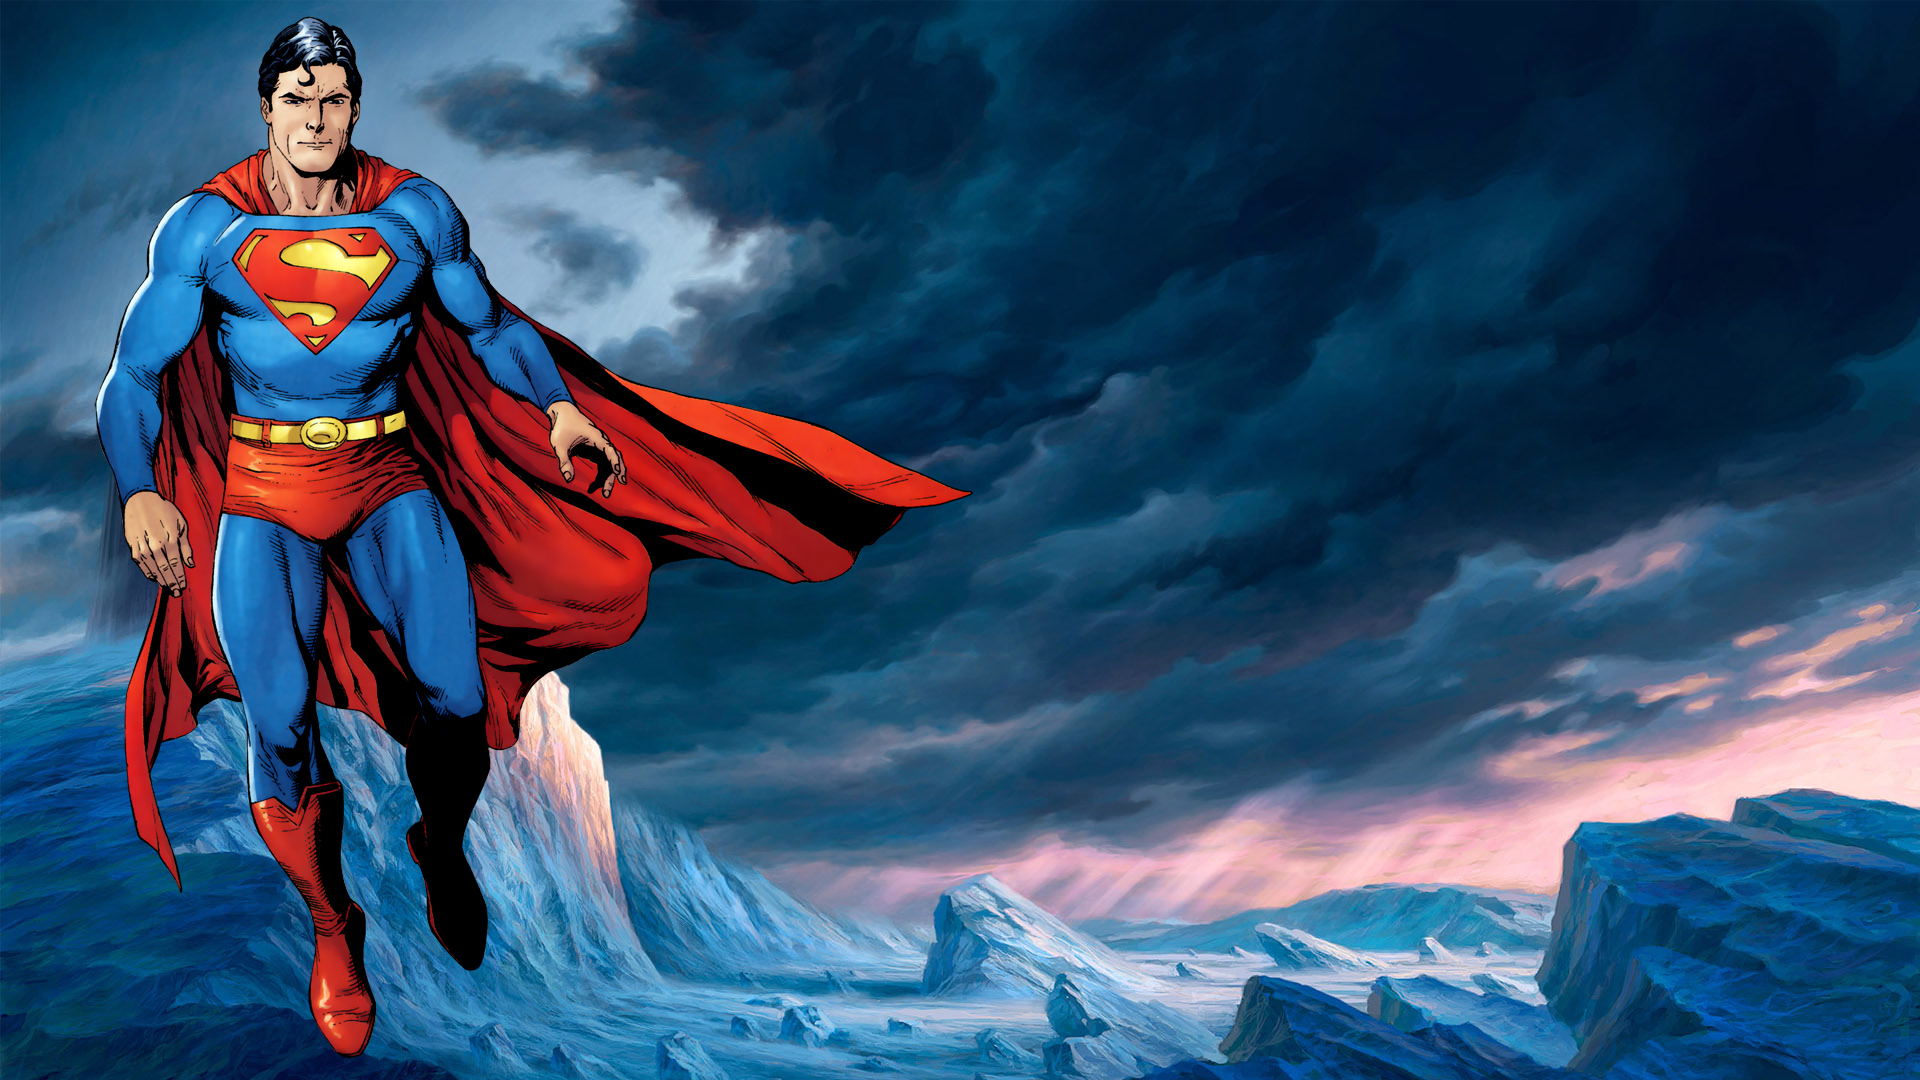 Free download superman wallpaper superhero man suit coat symbol flying [1920x1080] for your Desktop, Mobile & Tablet. Explore Superman Flying Wallpaper. Superman HD Wallpaper, Batman Vs Superman Wallpaper, Man